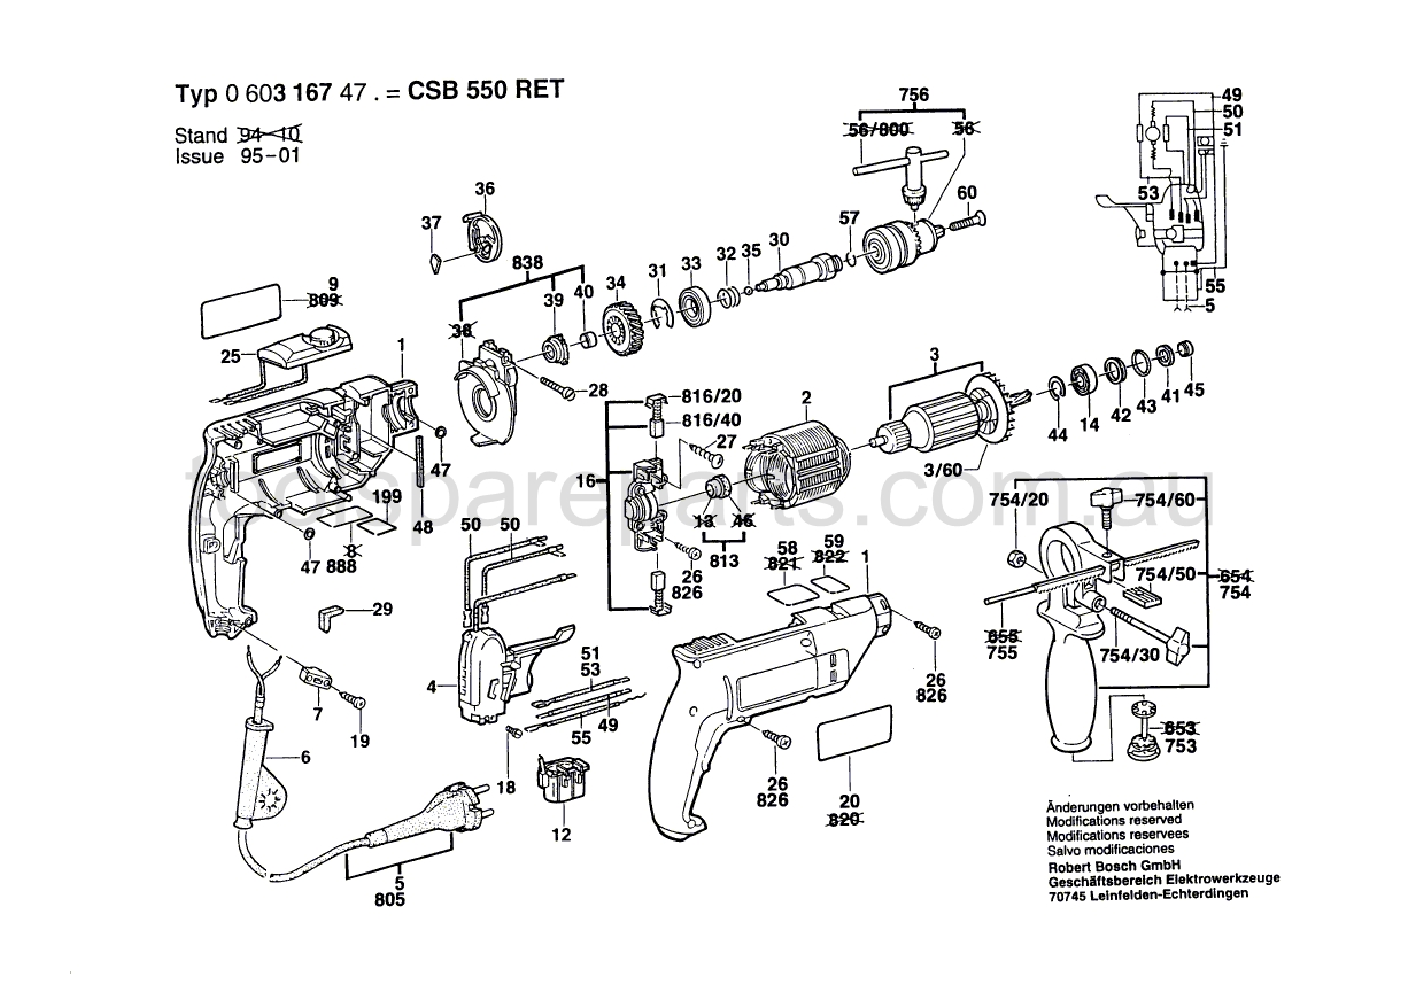 Bosch CSB 550 RET 0603167473  Diagram 1